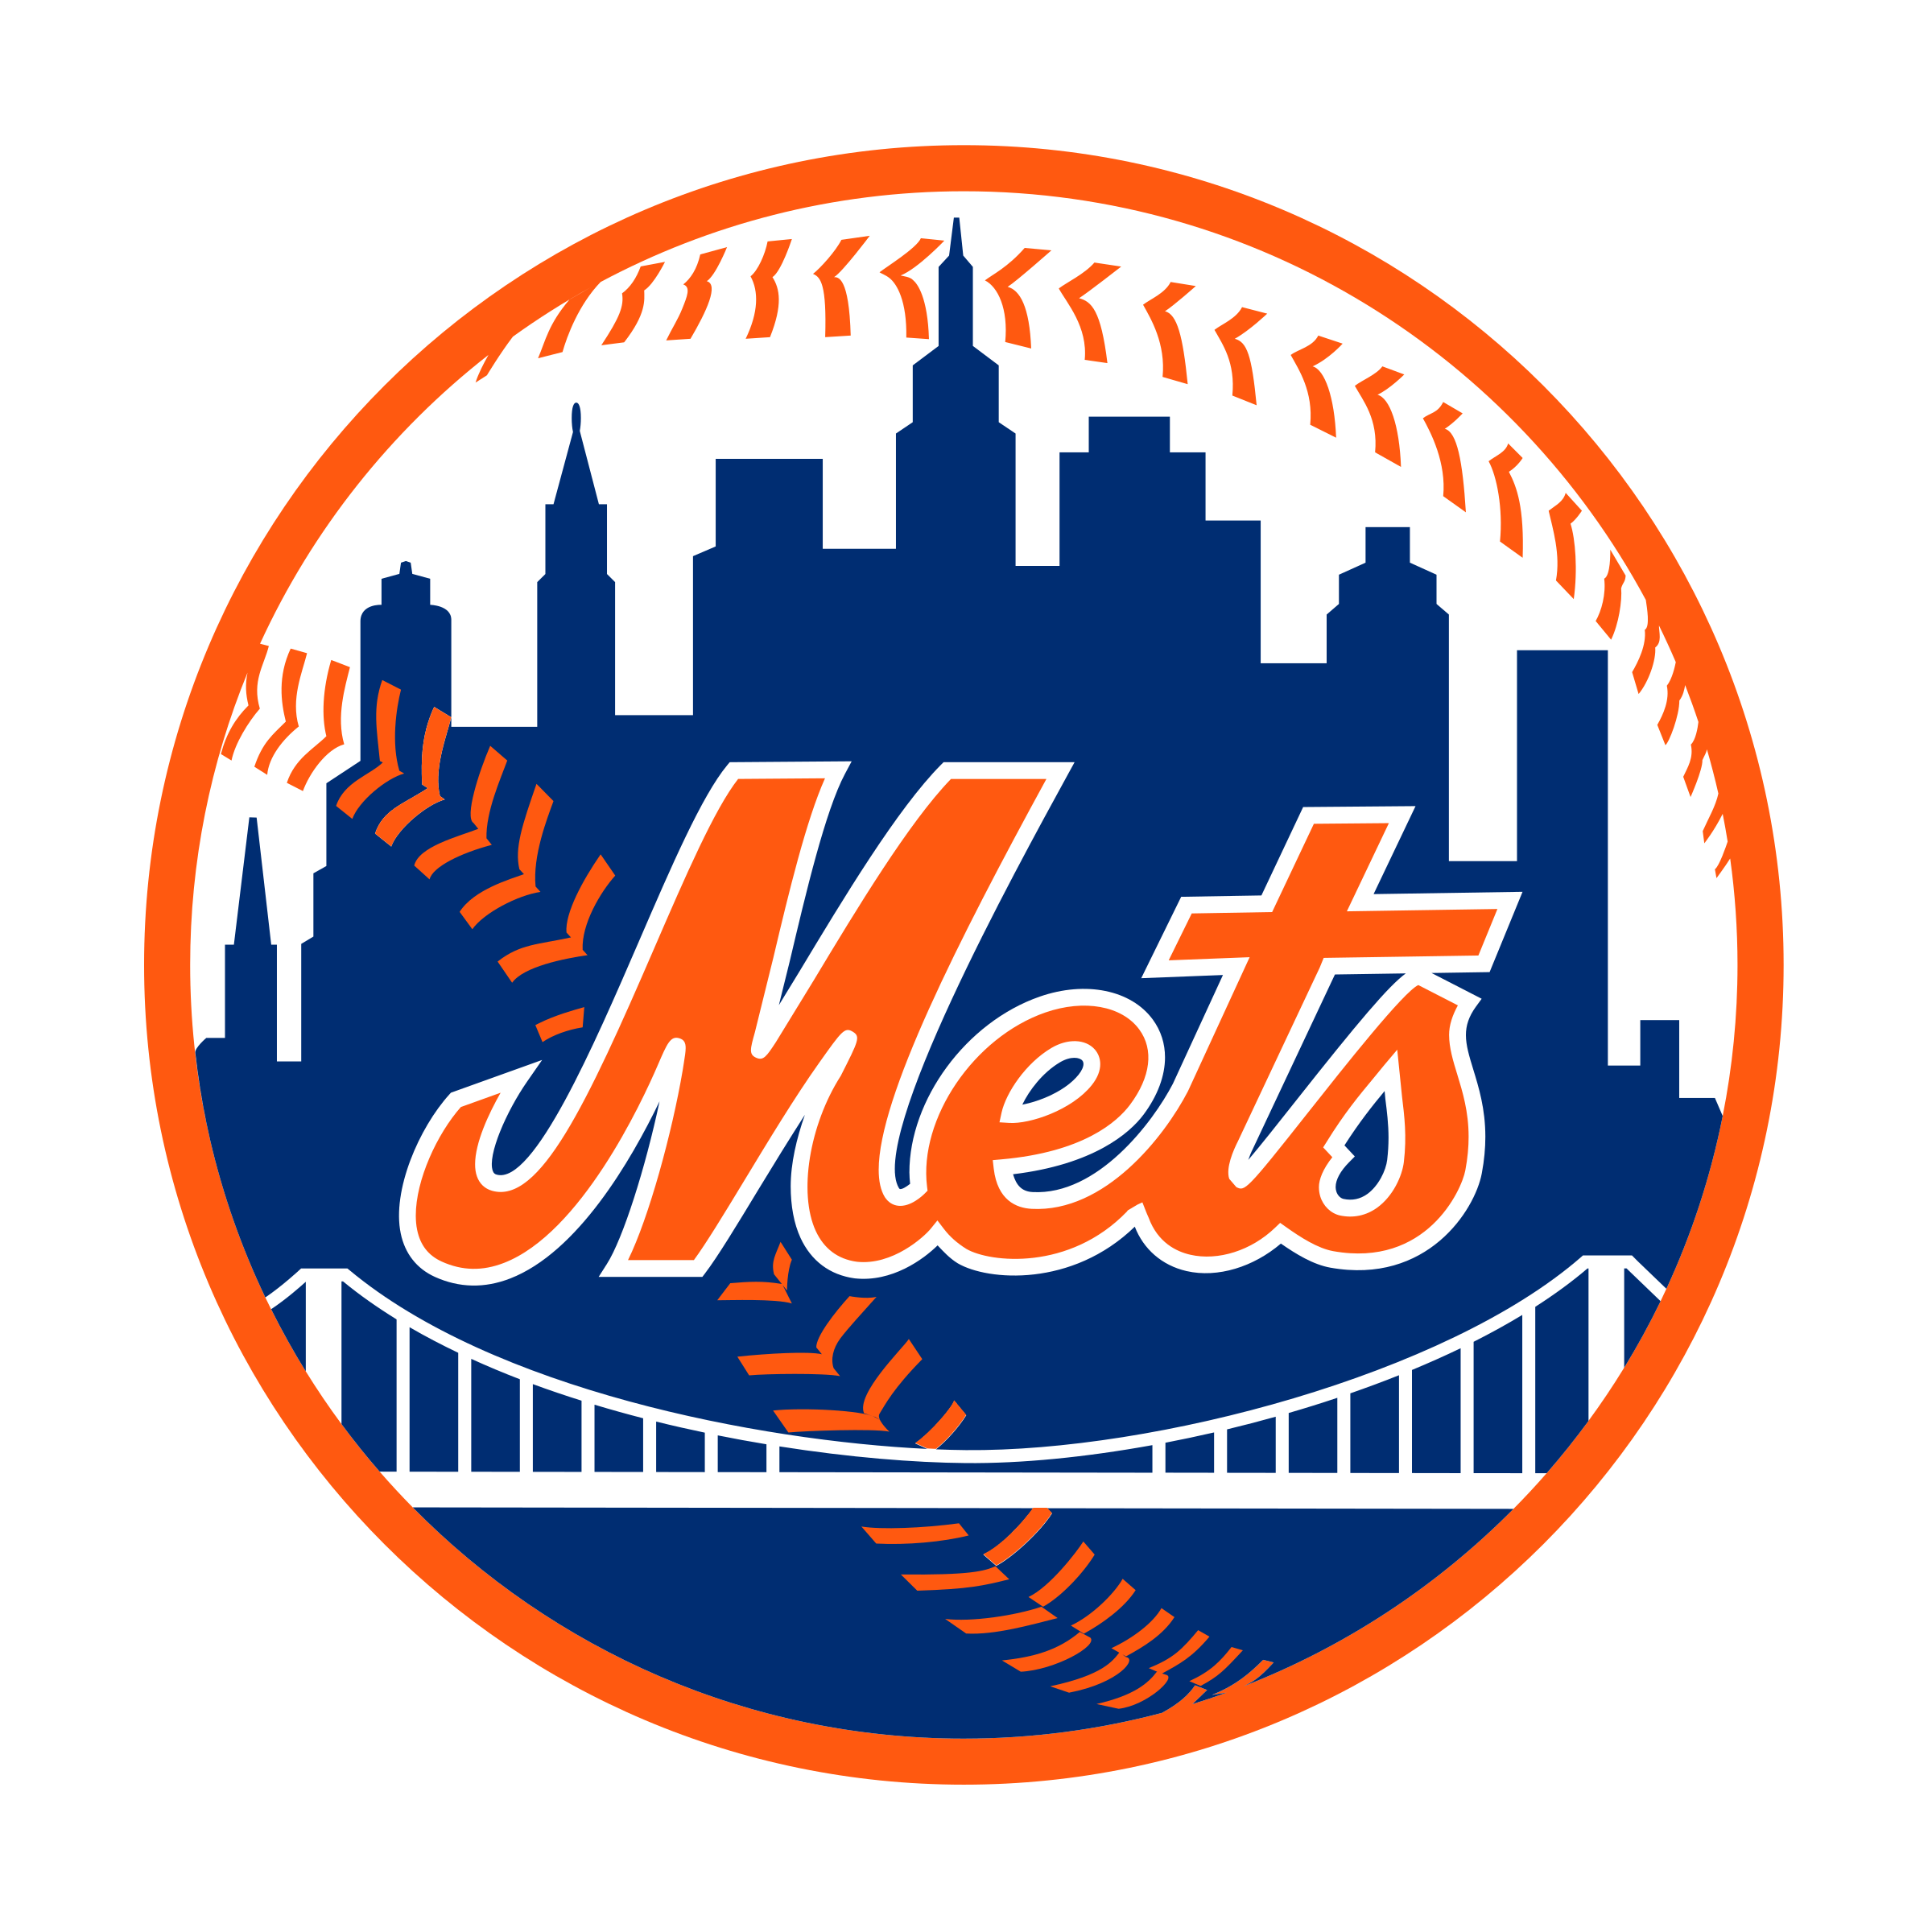 Mets Logo - New York Mets Logo PNG Transparent & SVG Vector - Freebie Supply